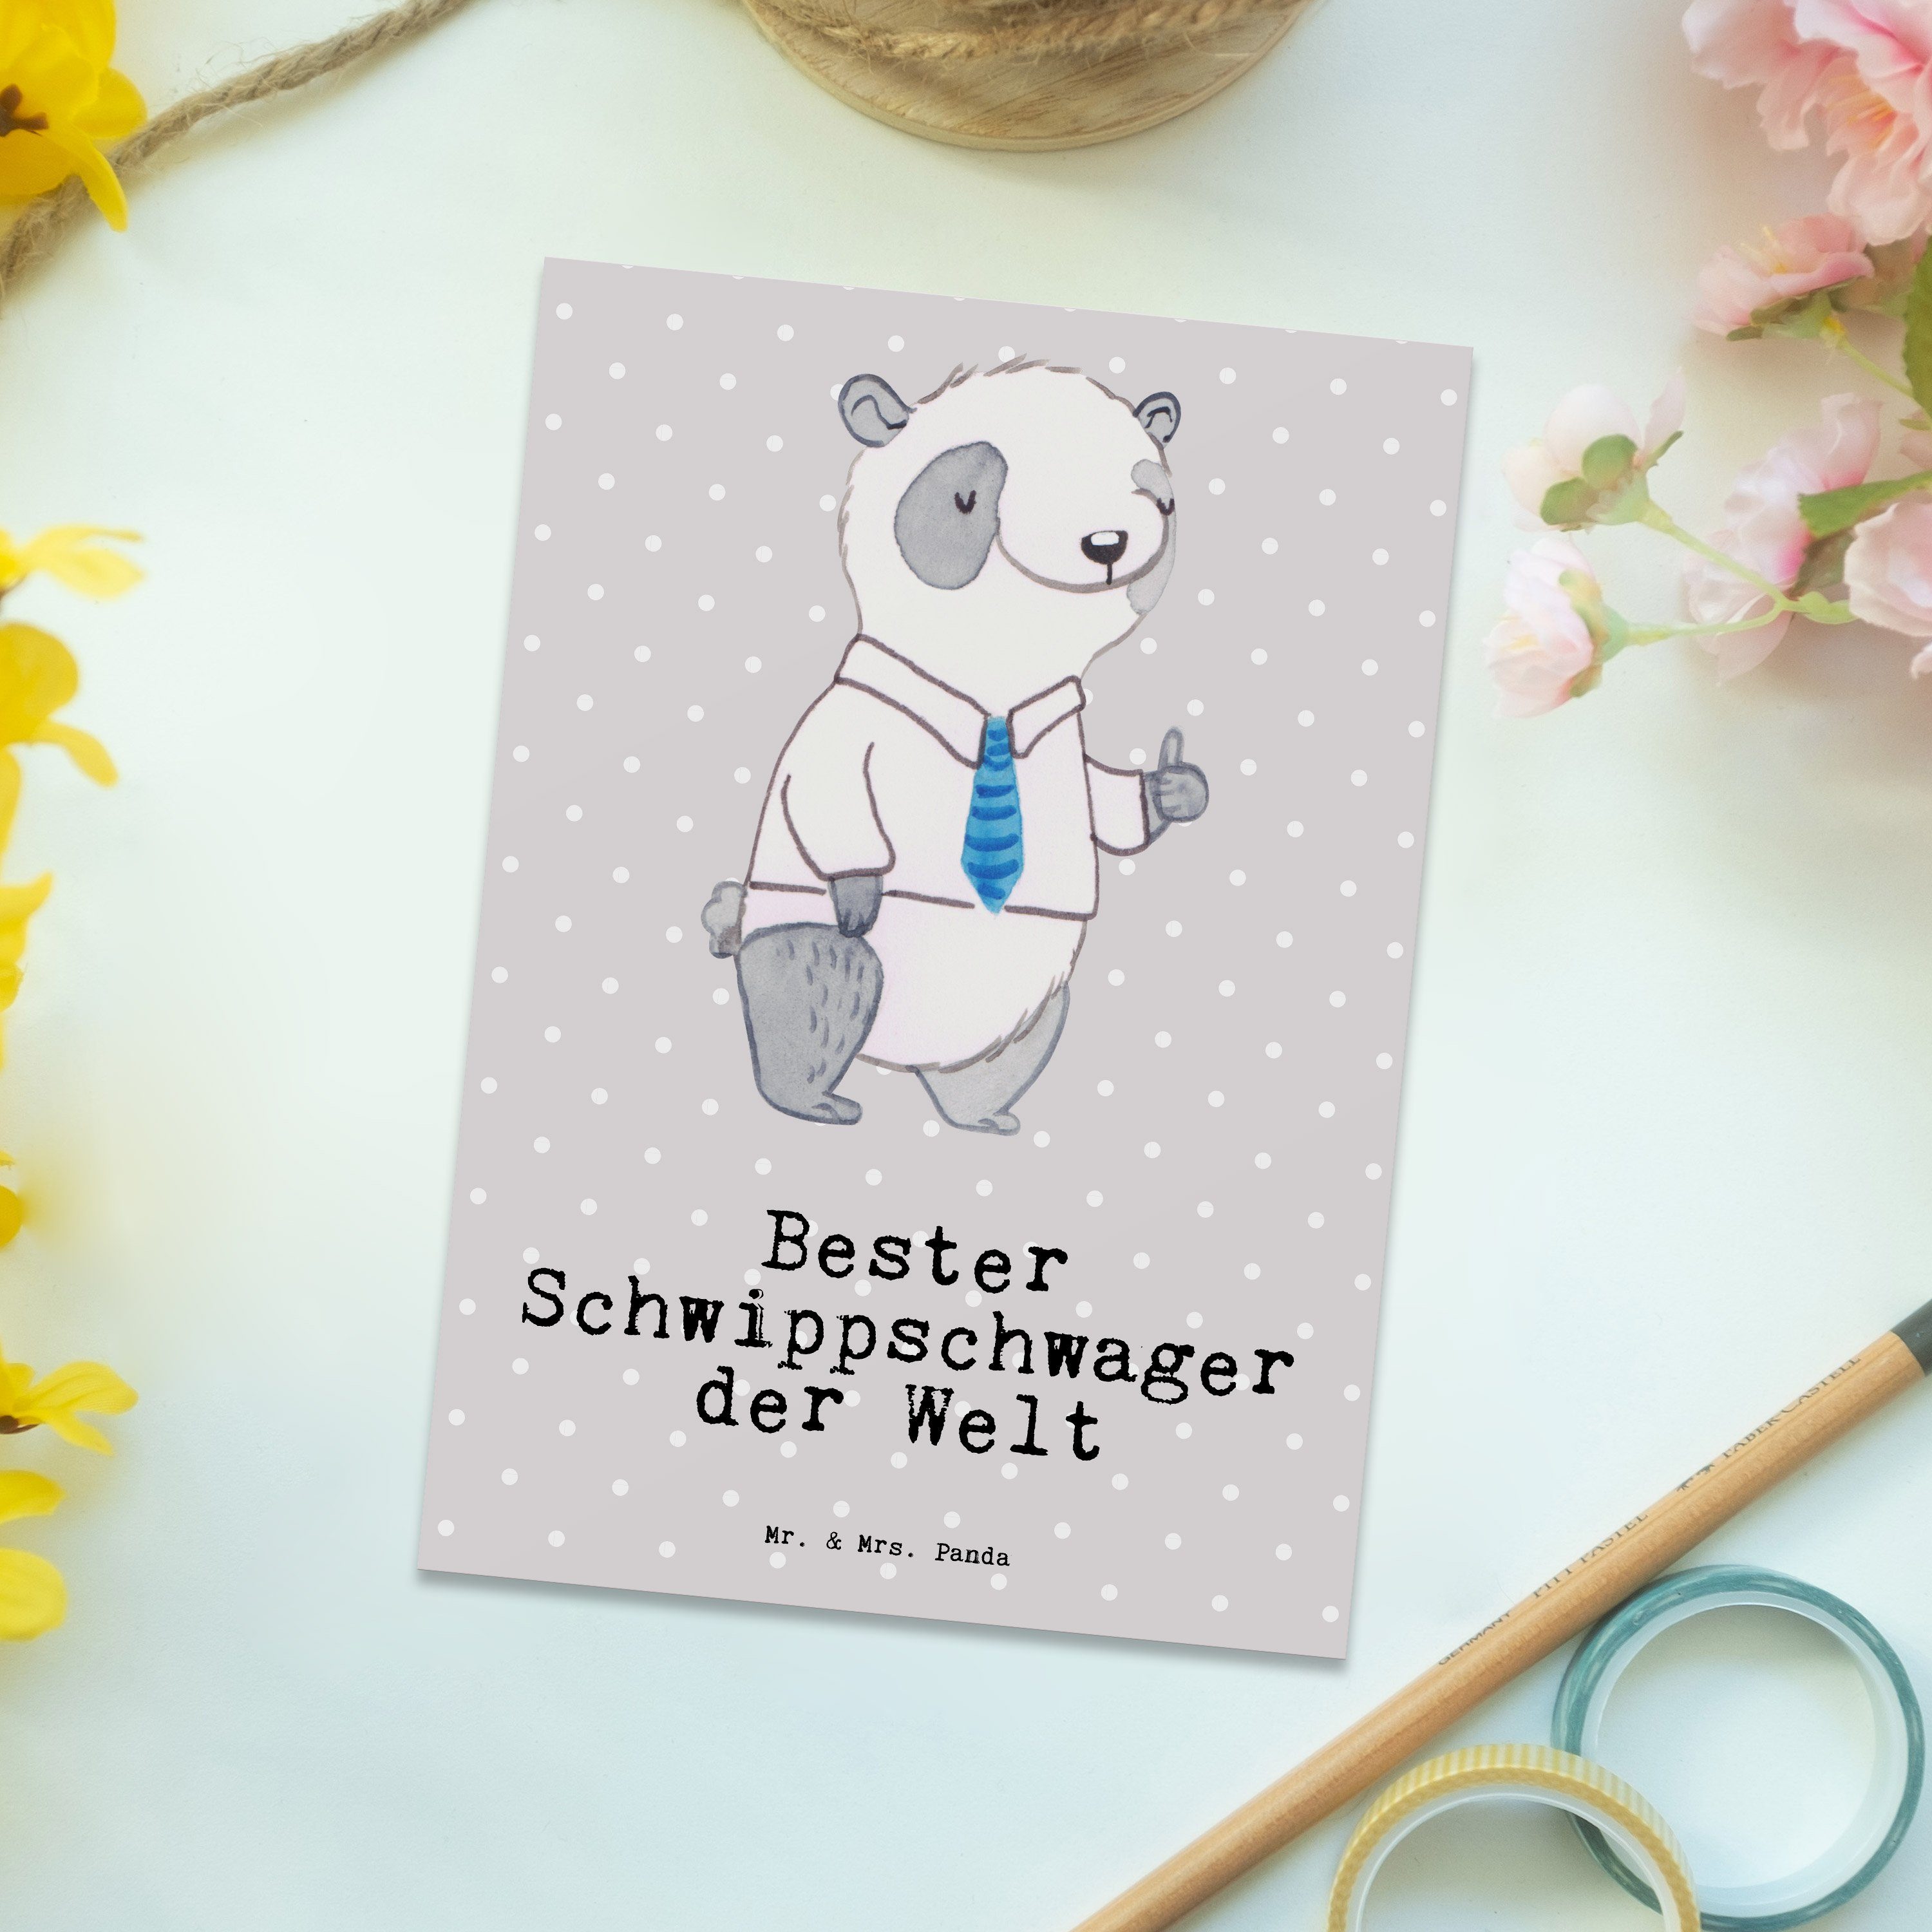 Mr. Gebu Panda Mrs. Panda Schwippschwager - Postkarte Welt Pastell Bester der - Geschenk, & Grau